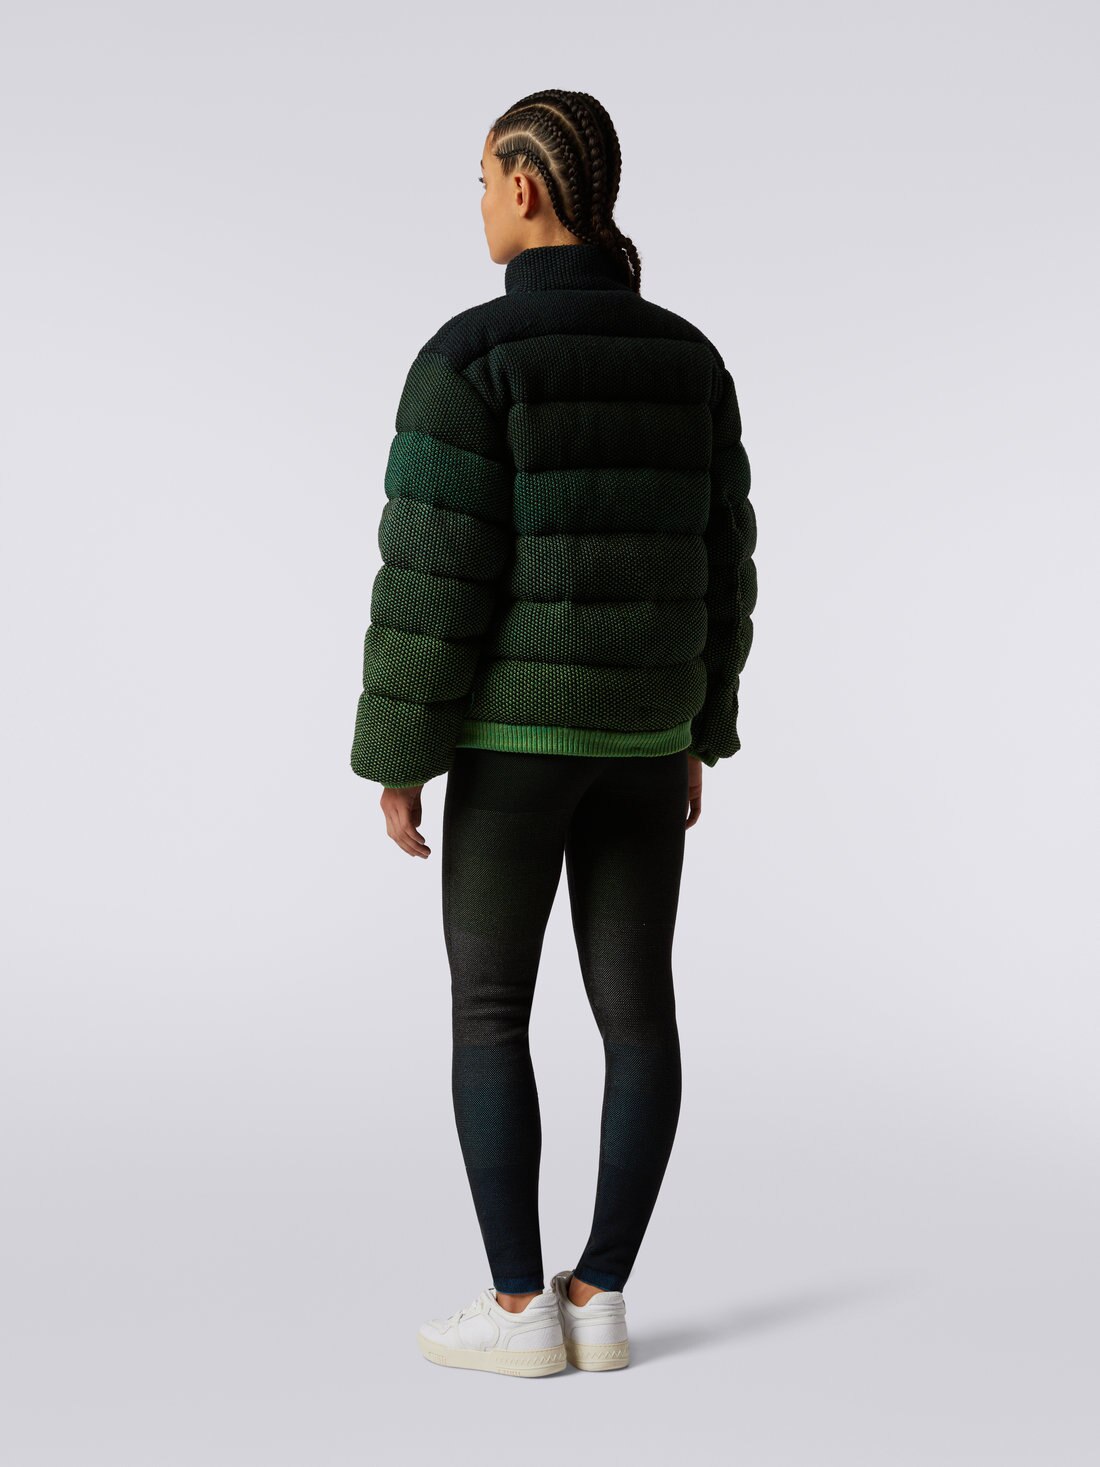 Cropped jacket in dégradé padded cotton blend, Green  - 2